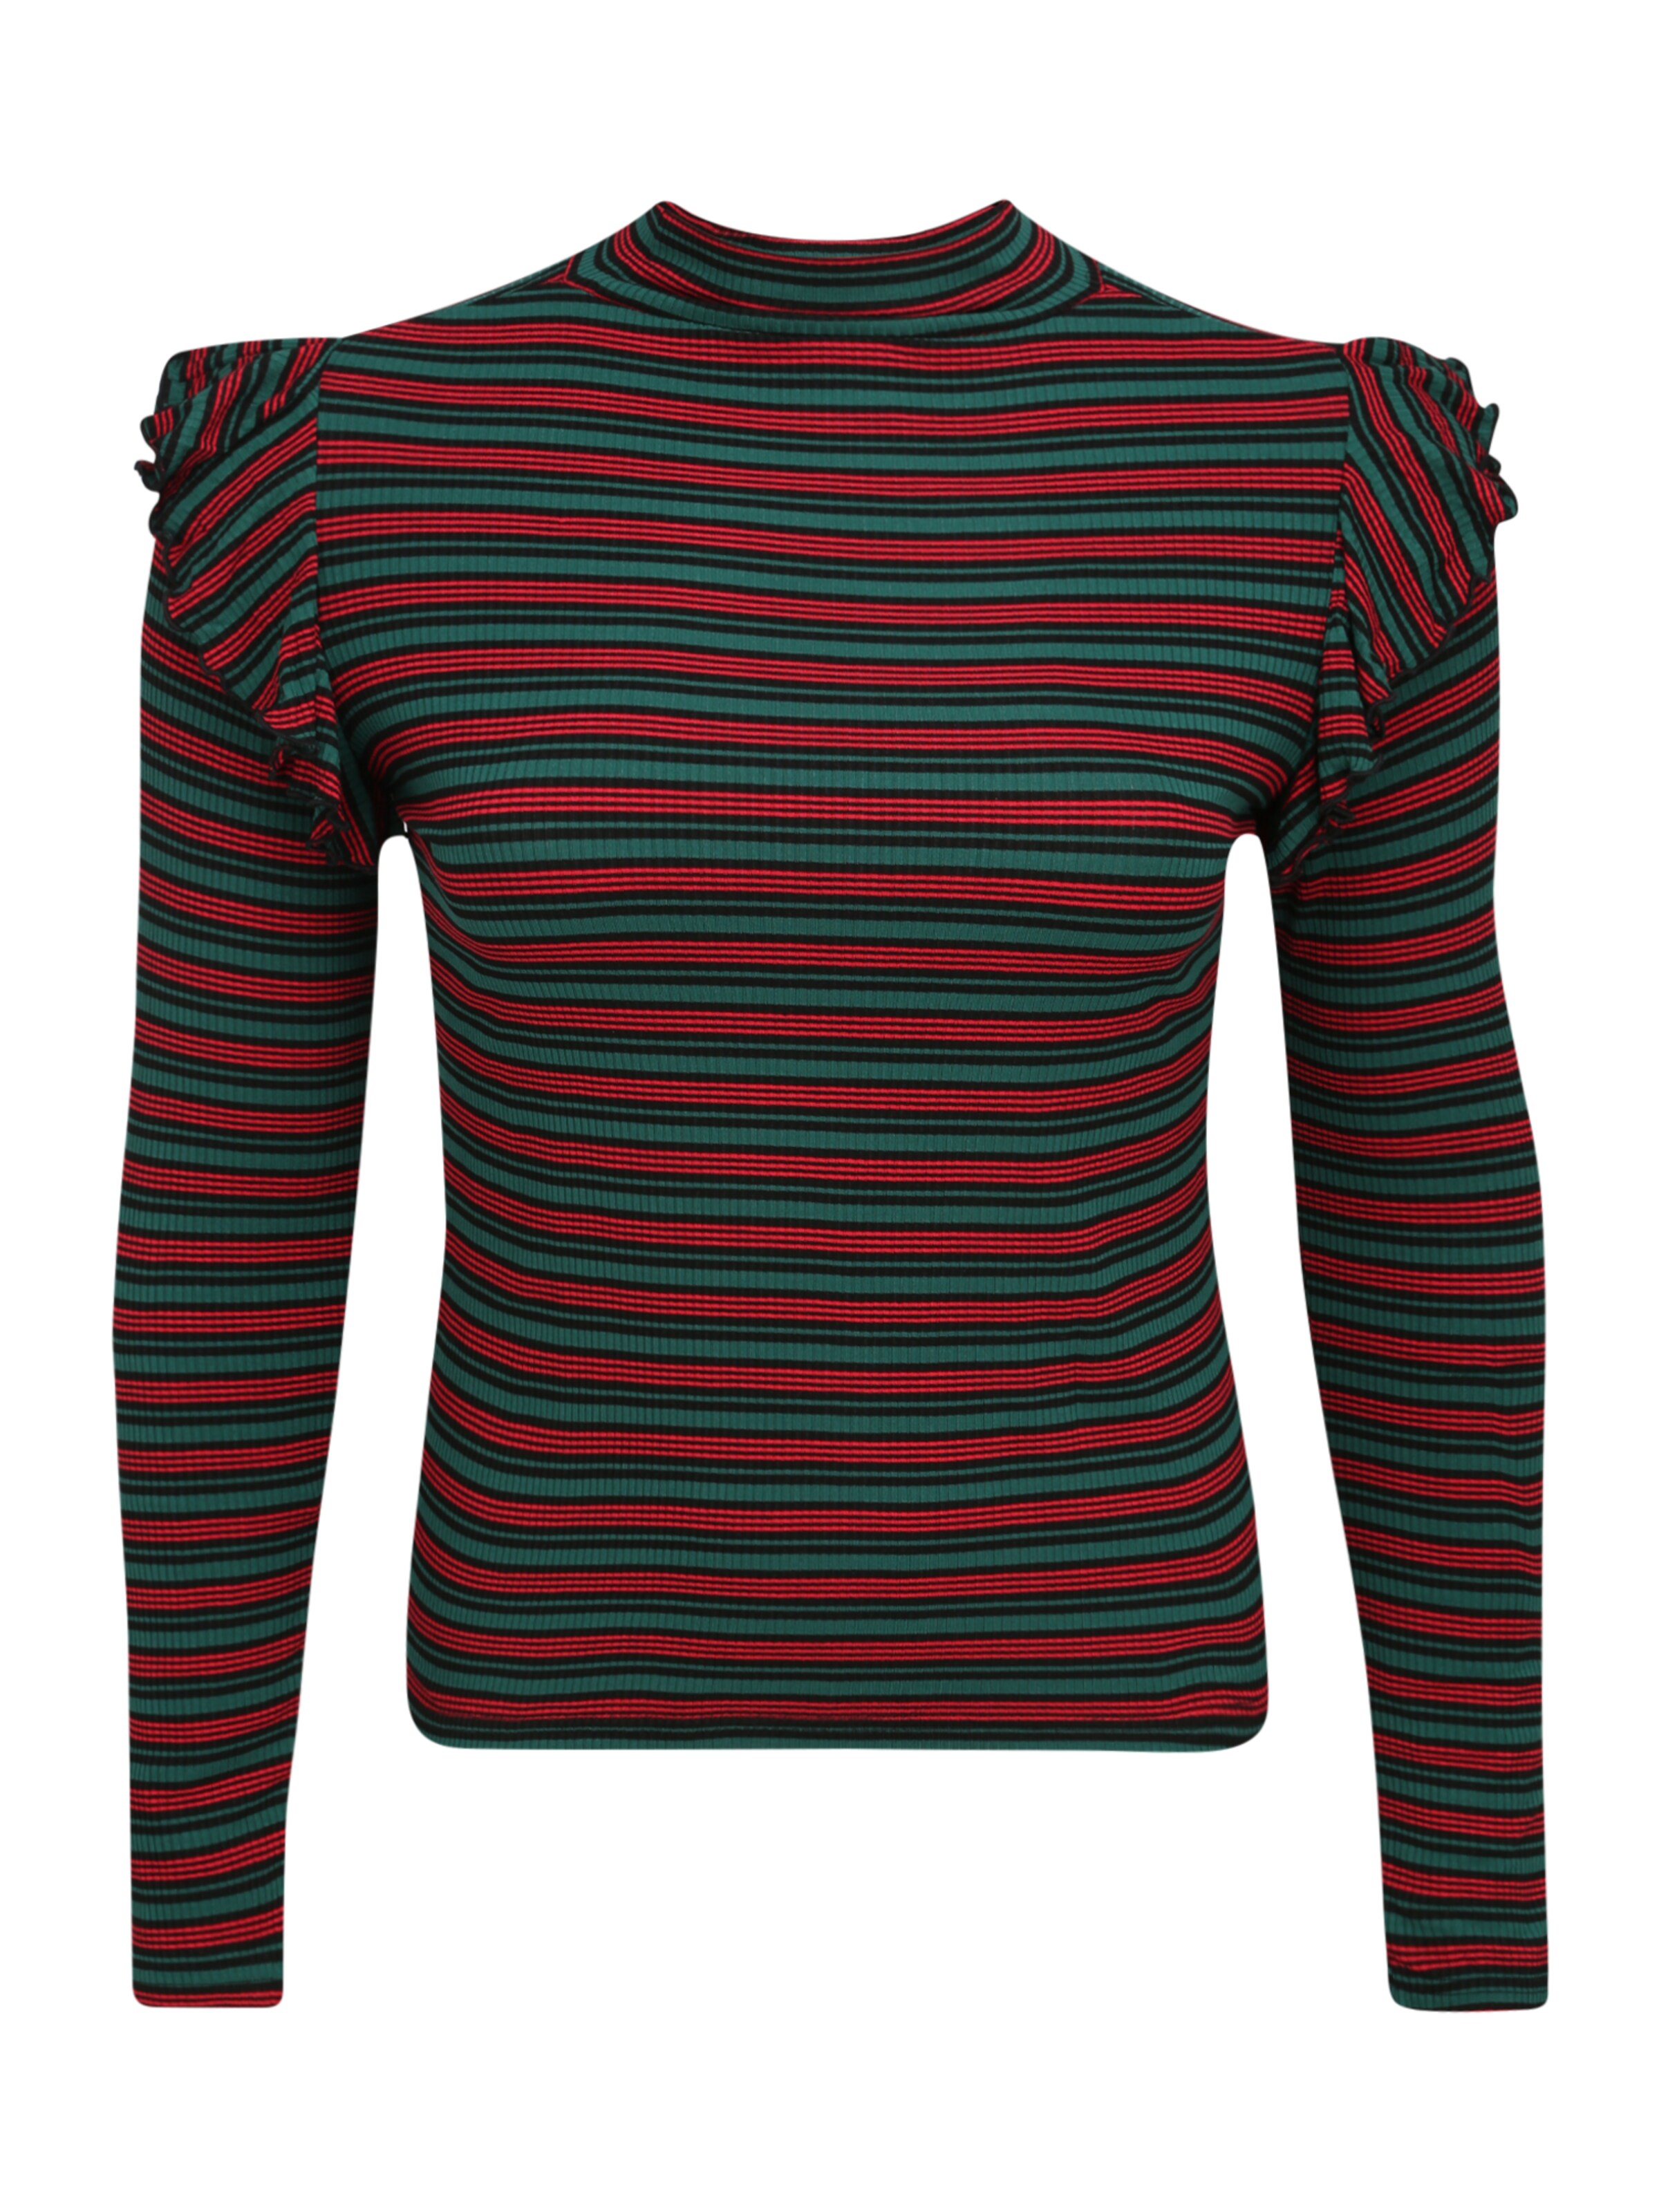 Frauen Shirts & Tops Urban Classics Shirt in Grün, Rot - XM83498